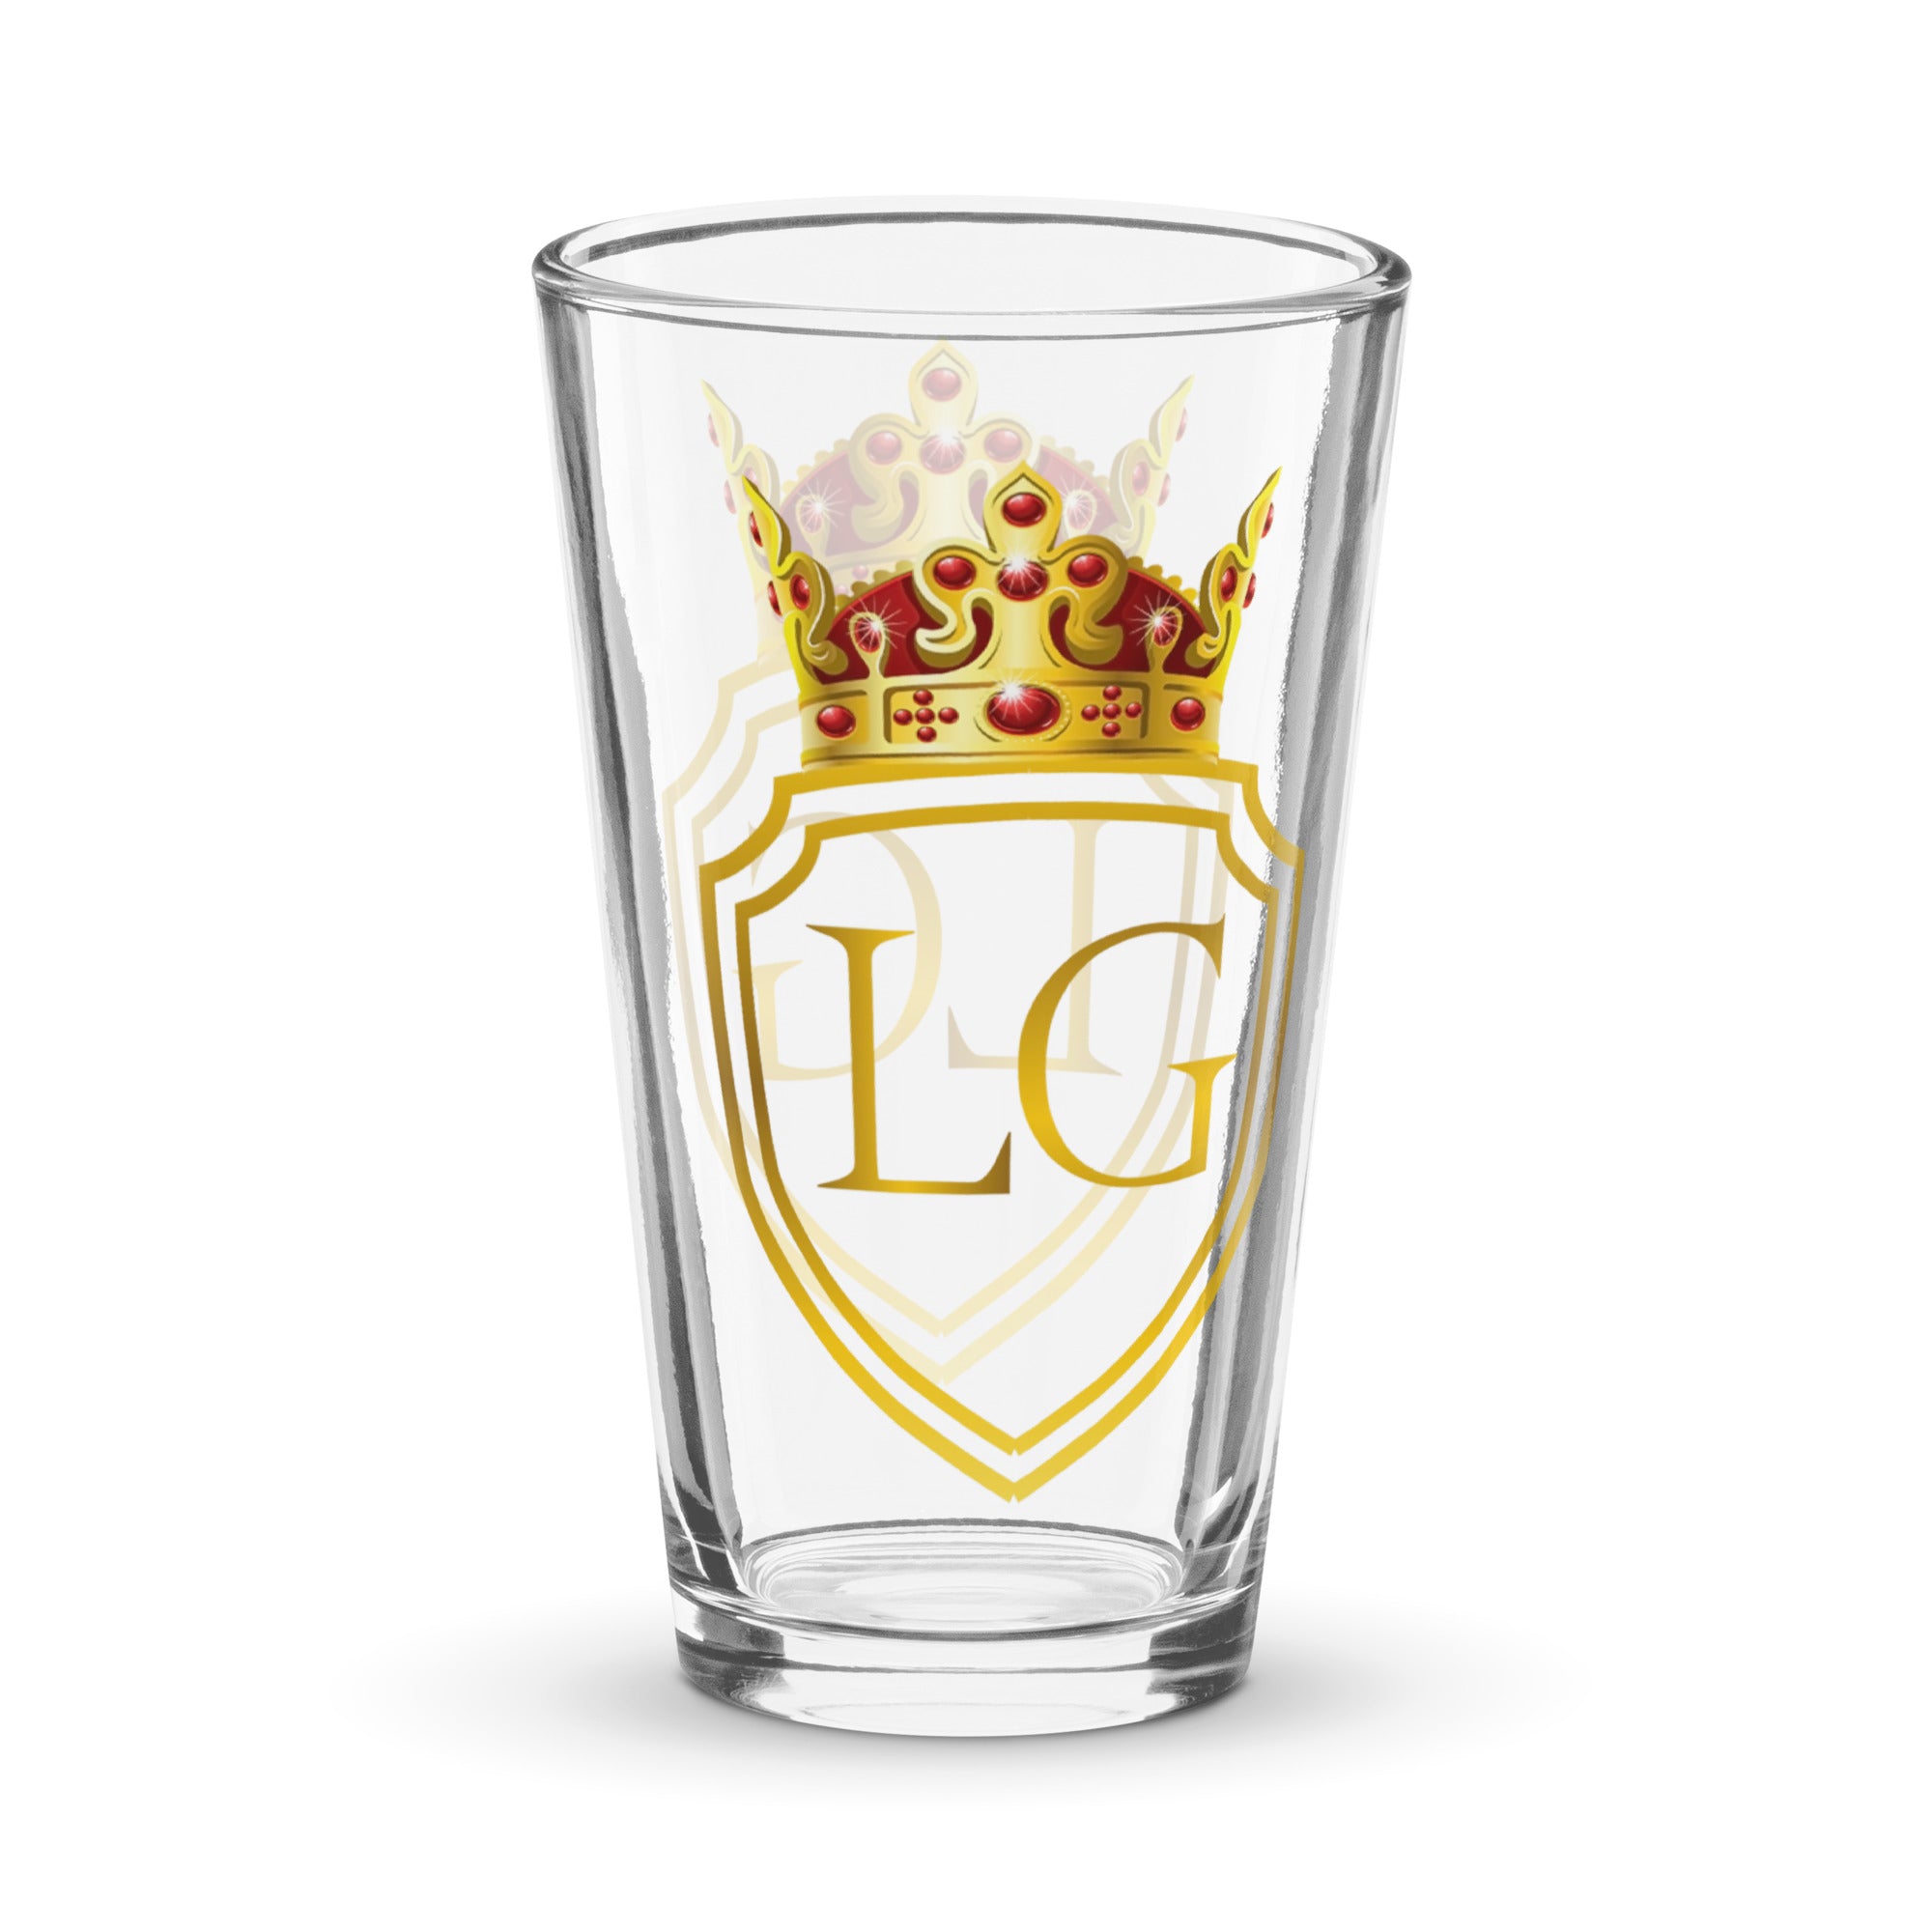 LeGrand Whitt - Shaker pint glass